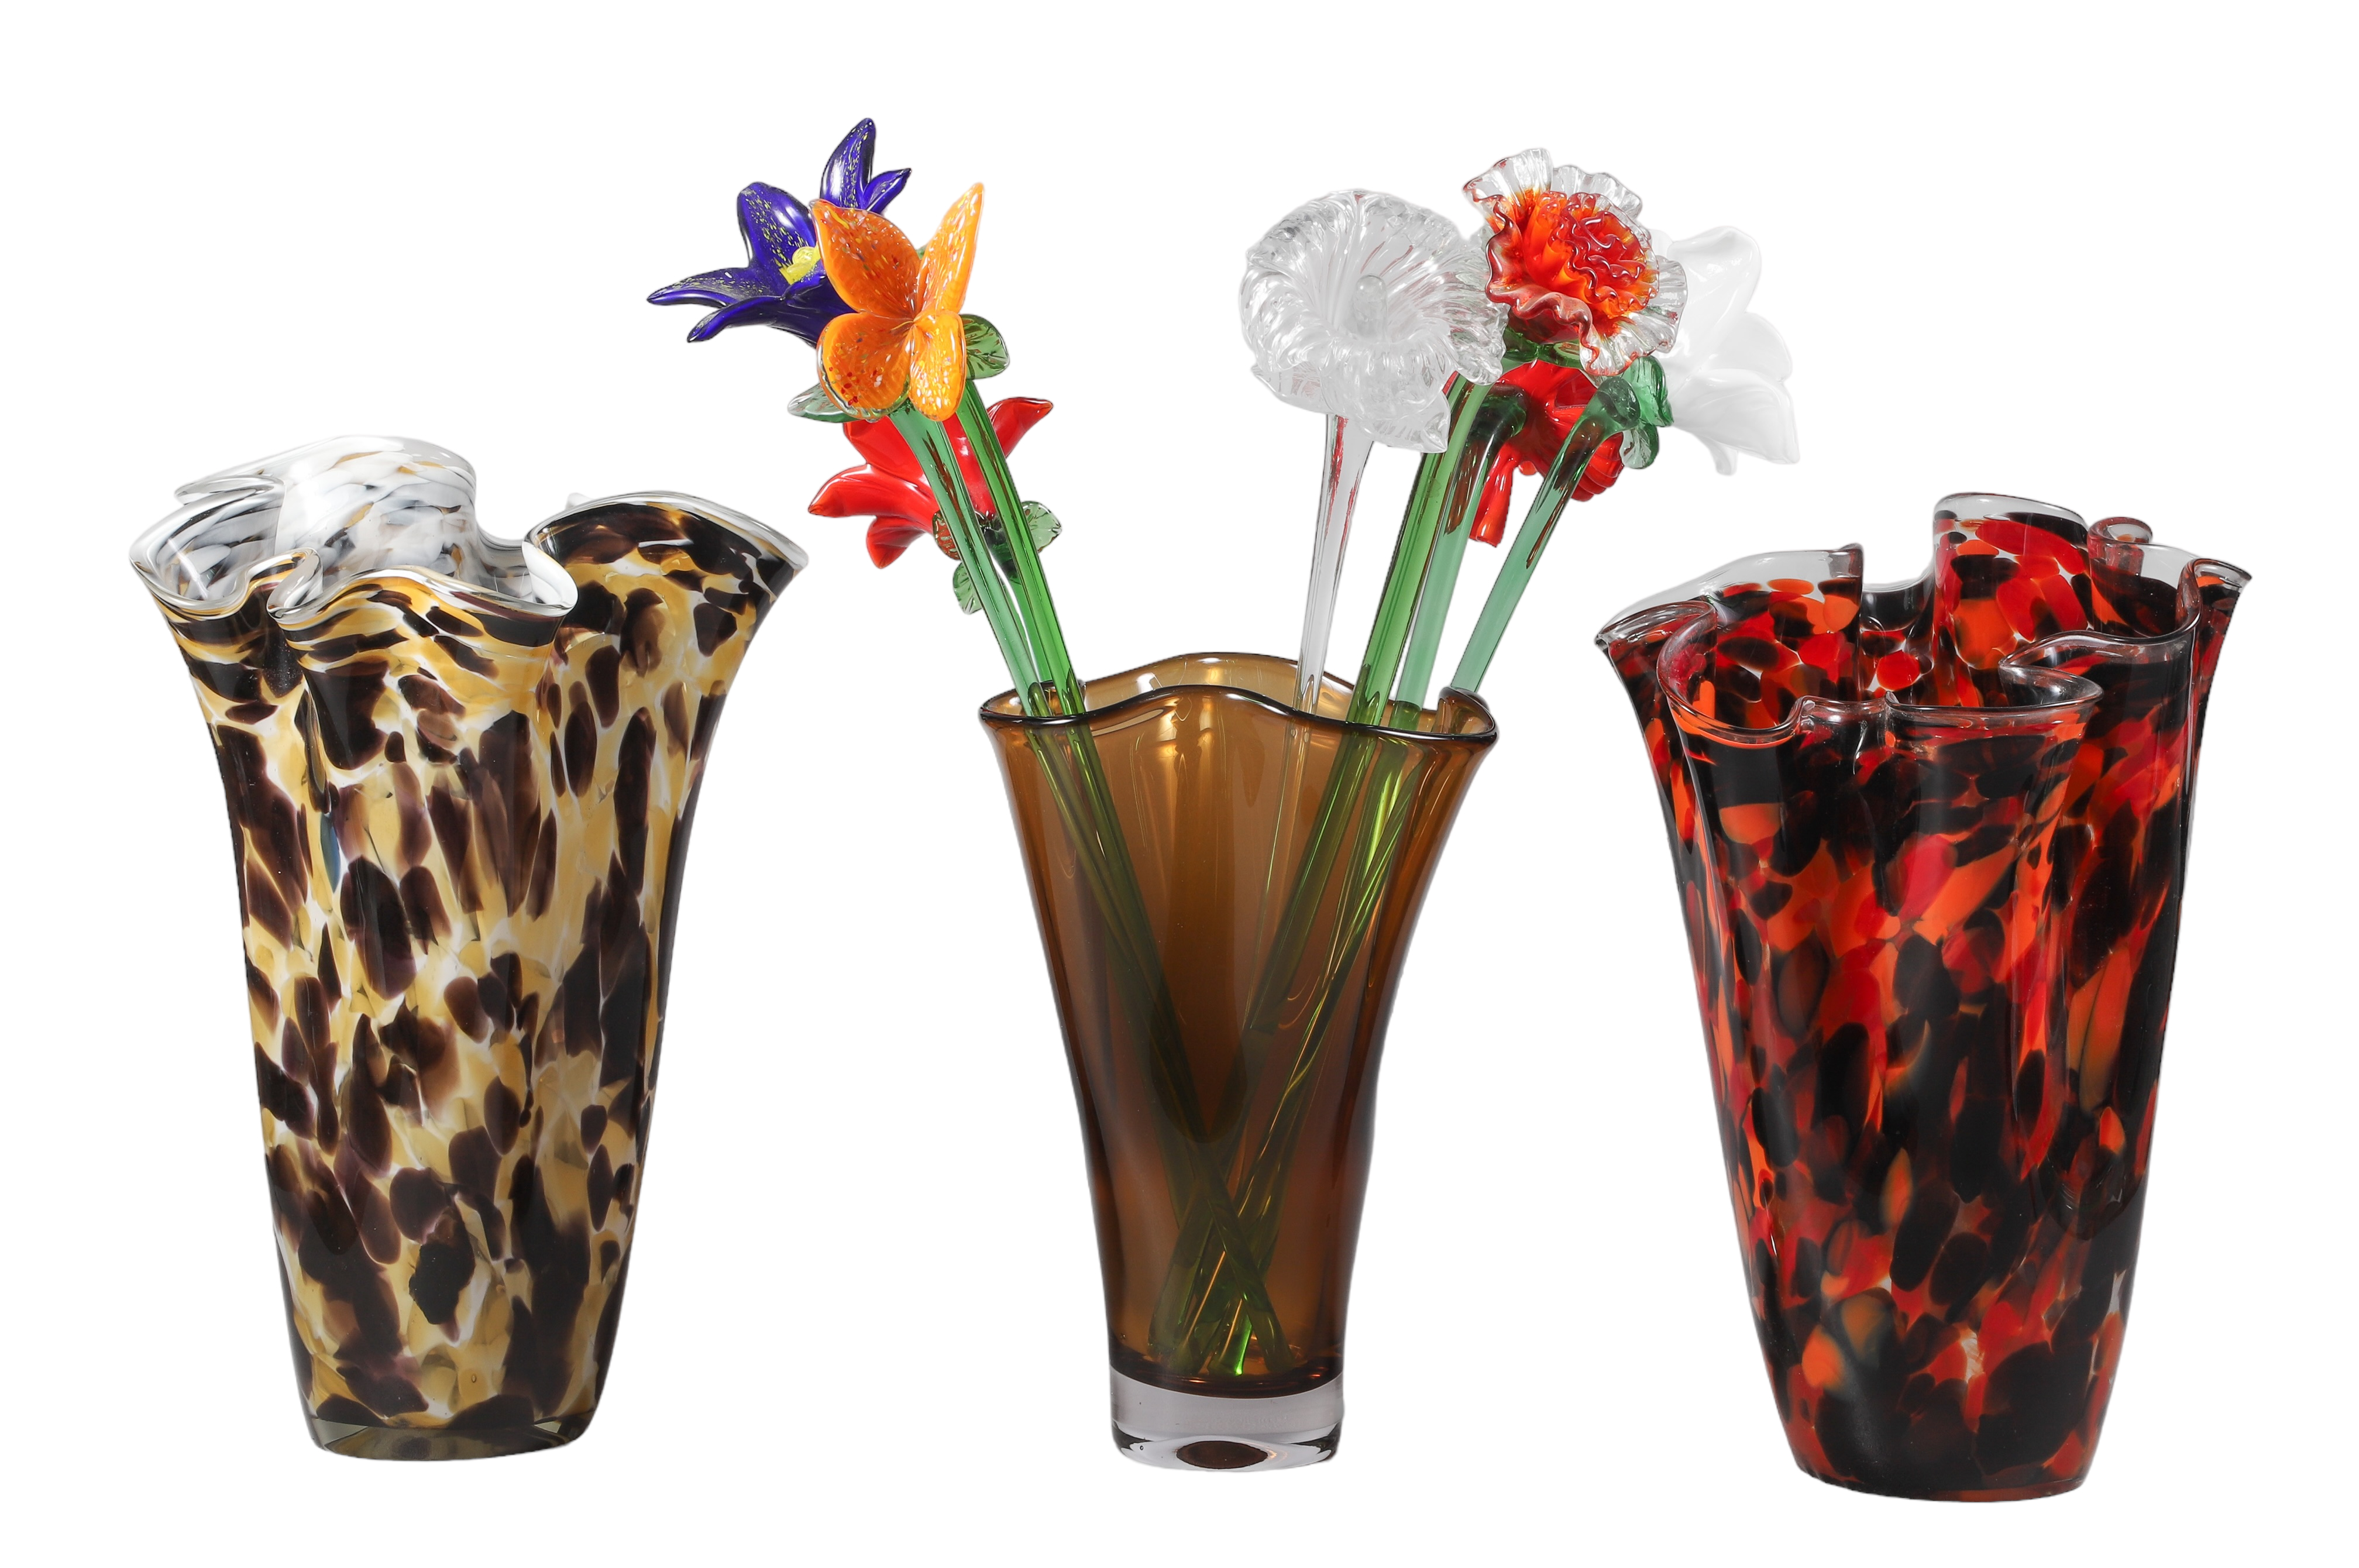  3 Art glass kerchief vases and 2e15d3